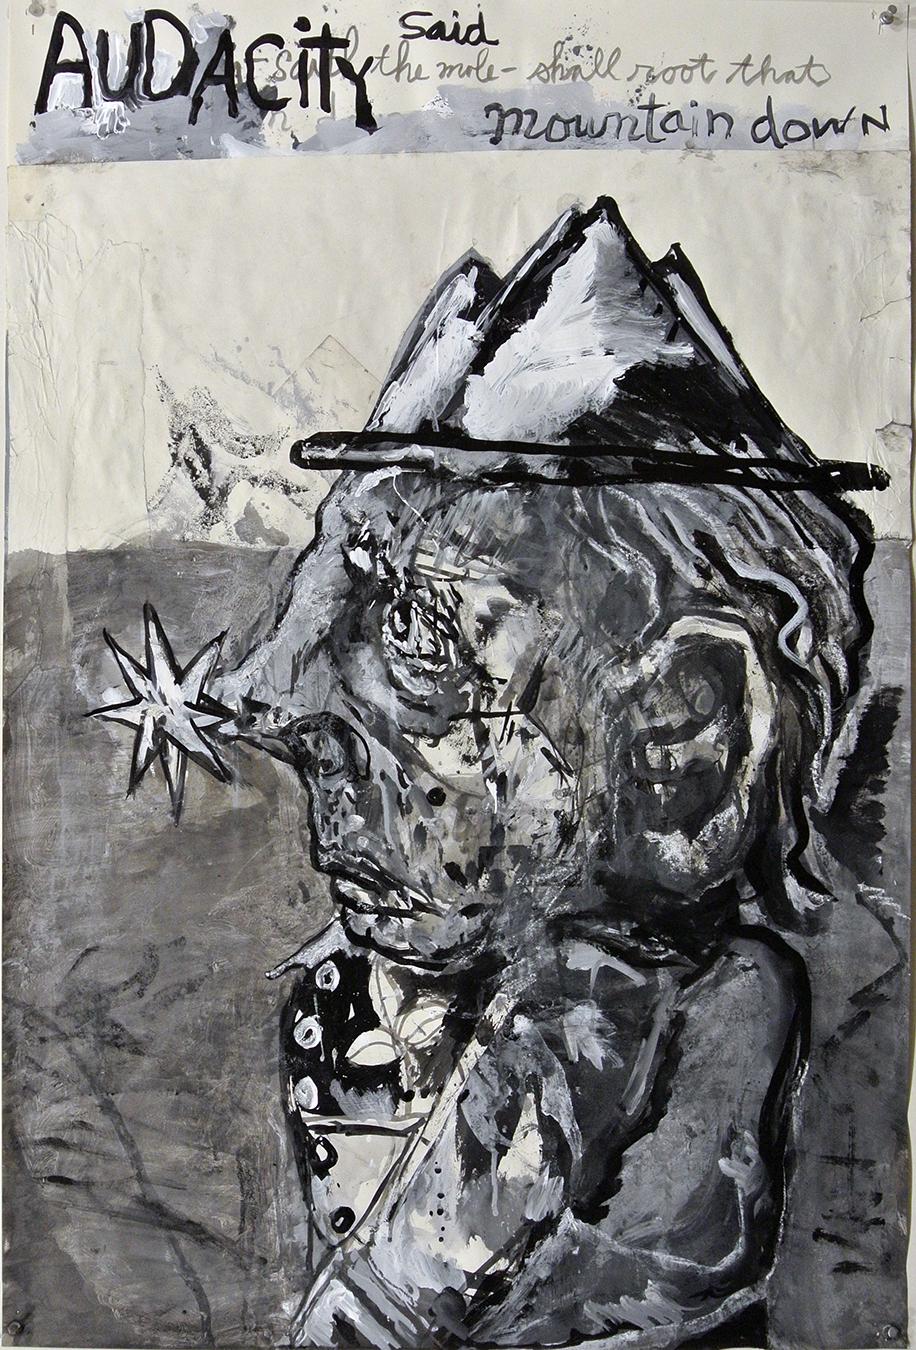 Dale Williams Portrait Painting - "Starnosed Mole", acrylic painting, portrait, politics, poetry, humanity, resist